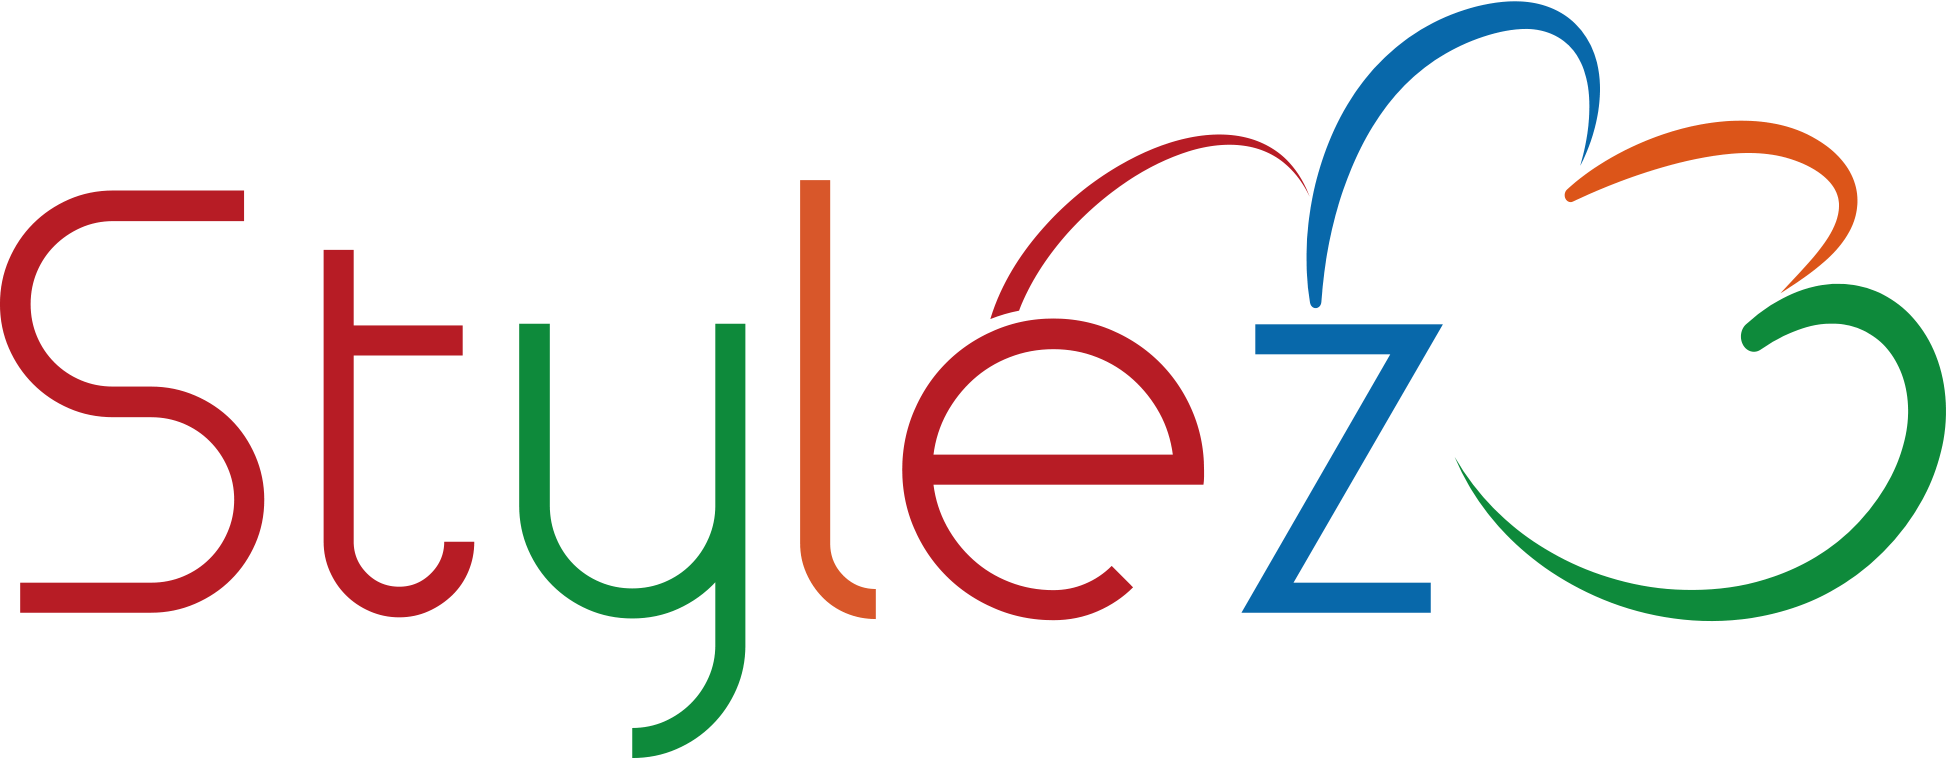 Stylez logo